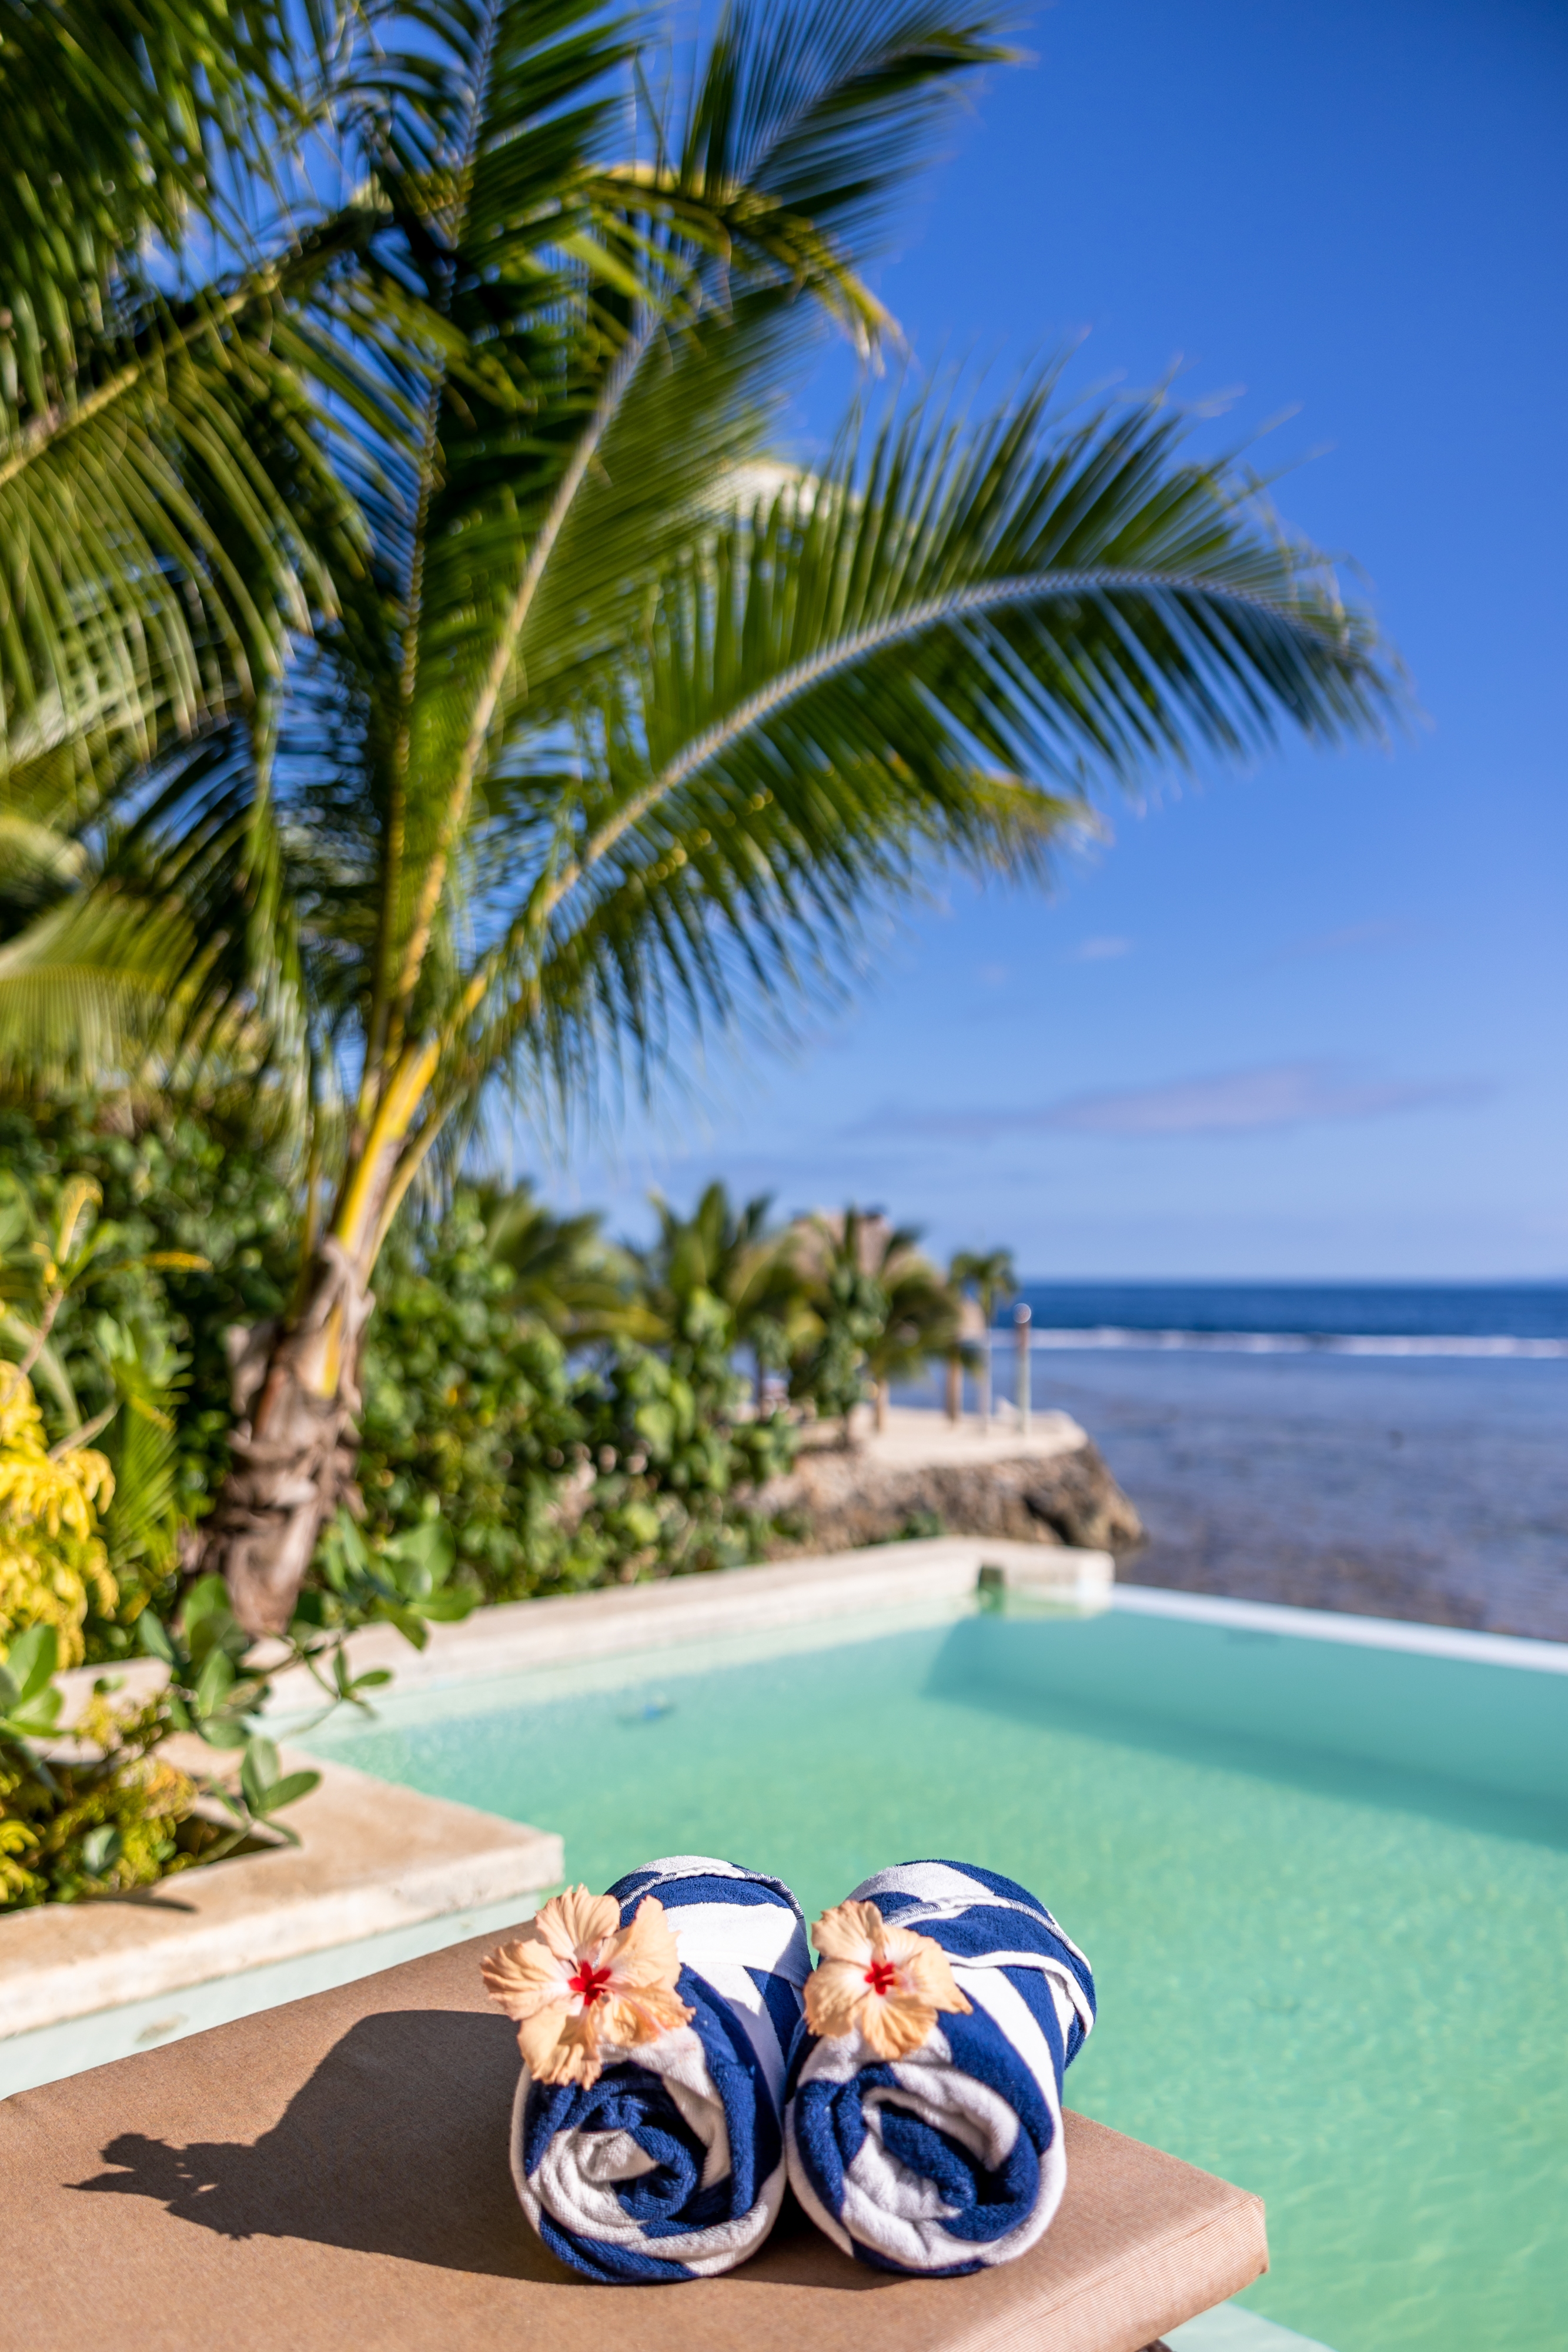 Savasi Island Villa with pool and towels